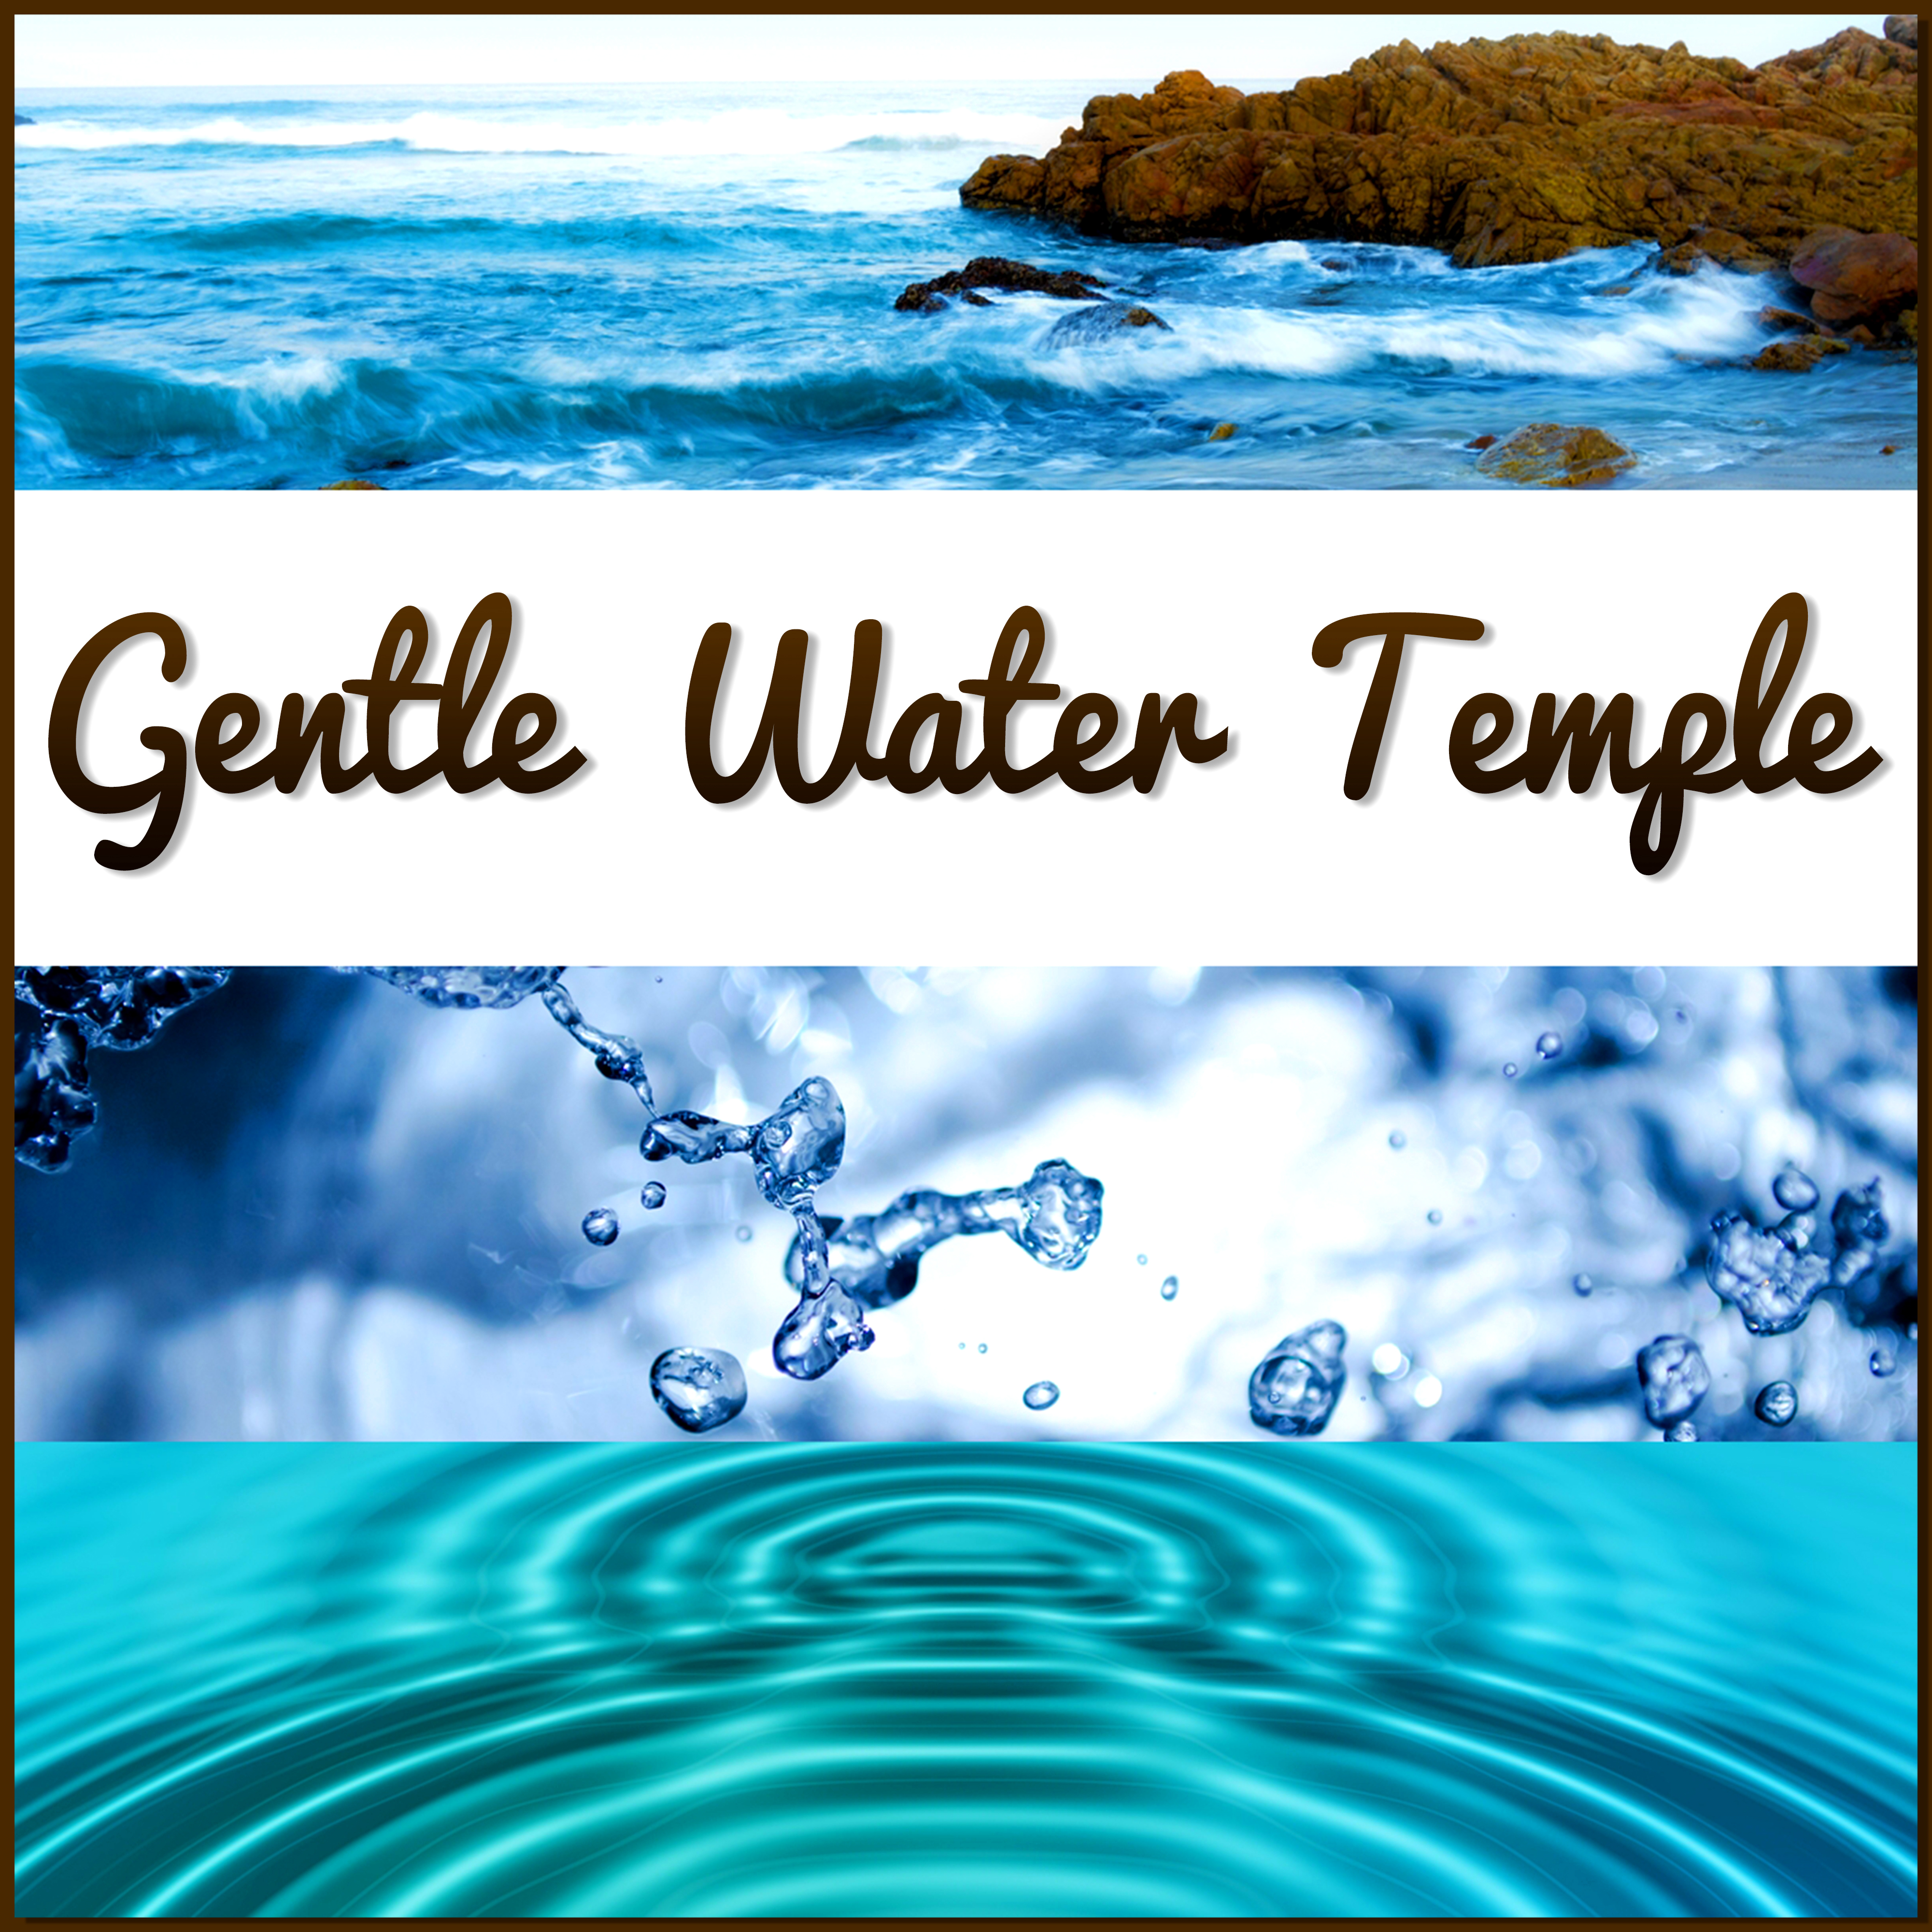 Gentle Water Temple – Healing Sounds for Inner Peace, Rain, Ocean Waves, Dripping Water, Bubbling Brook, Sea, Waterfall